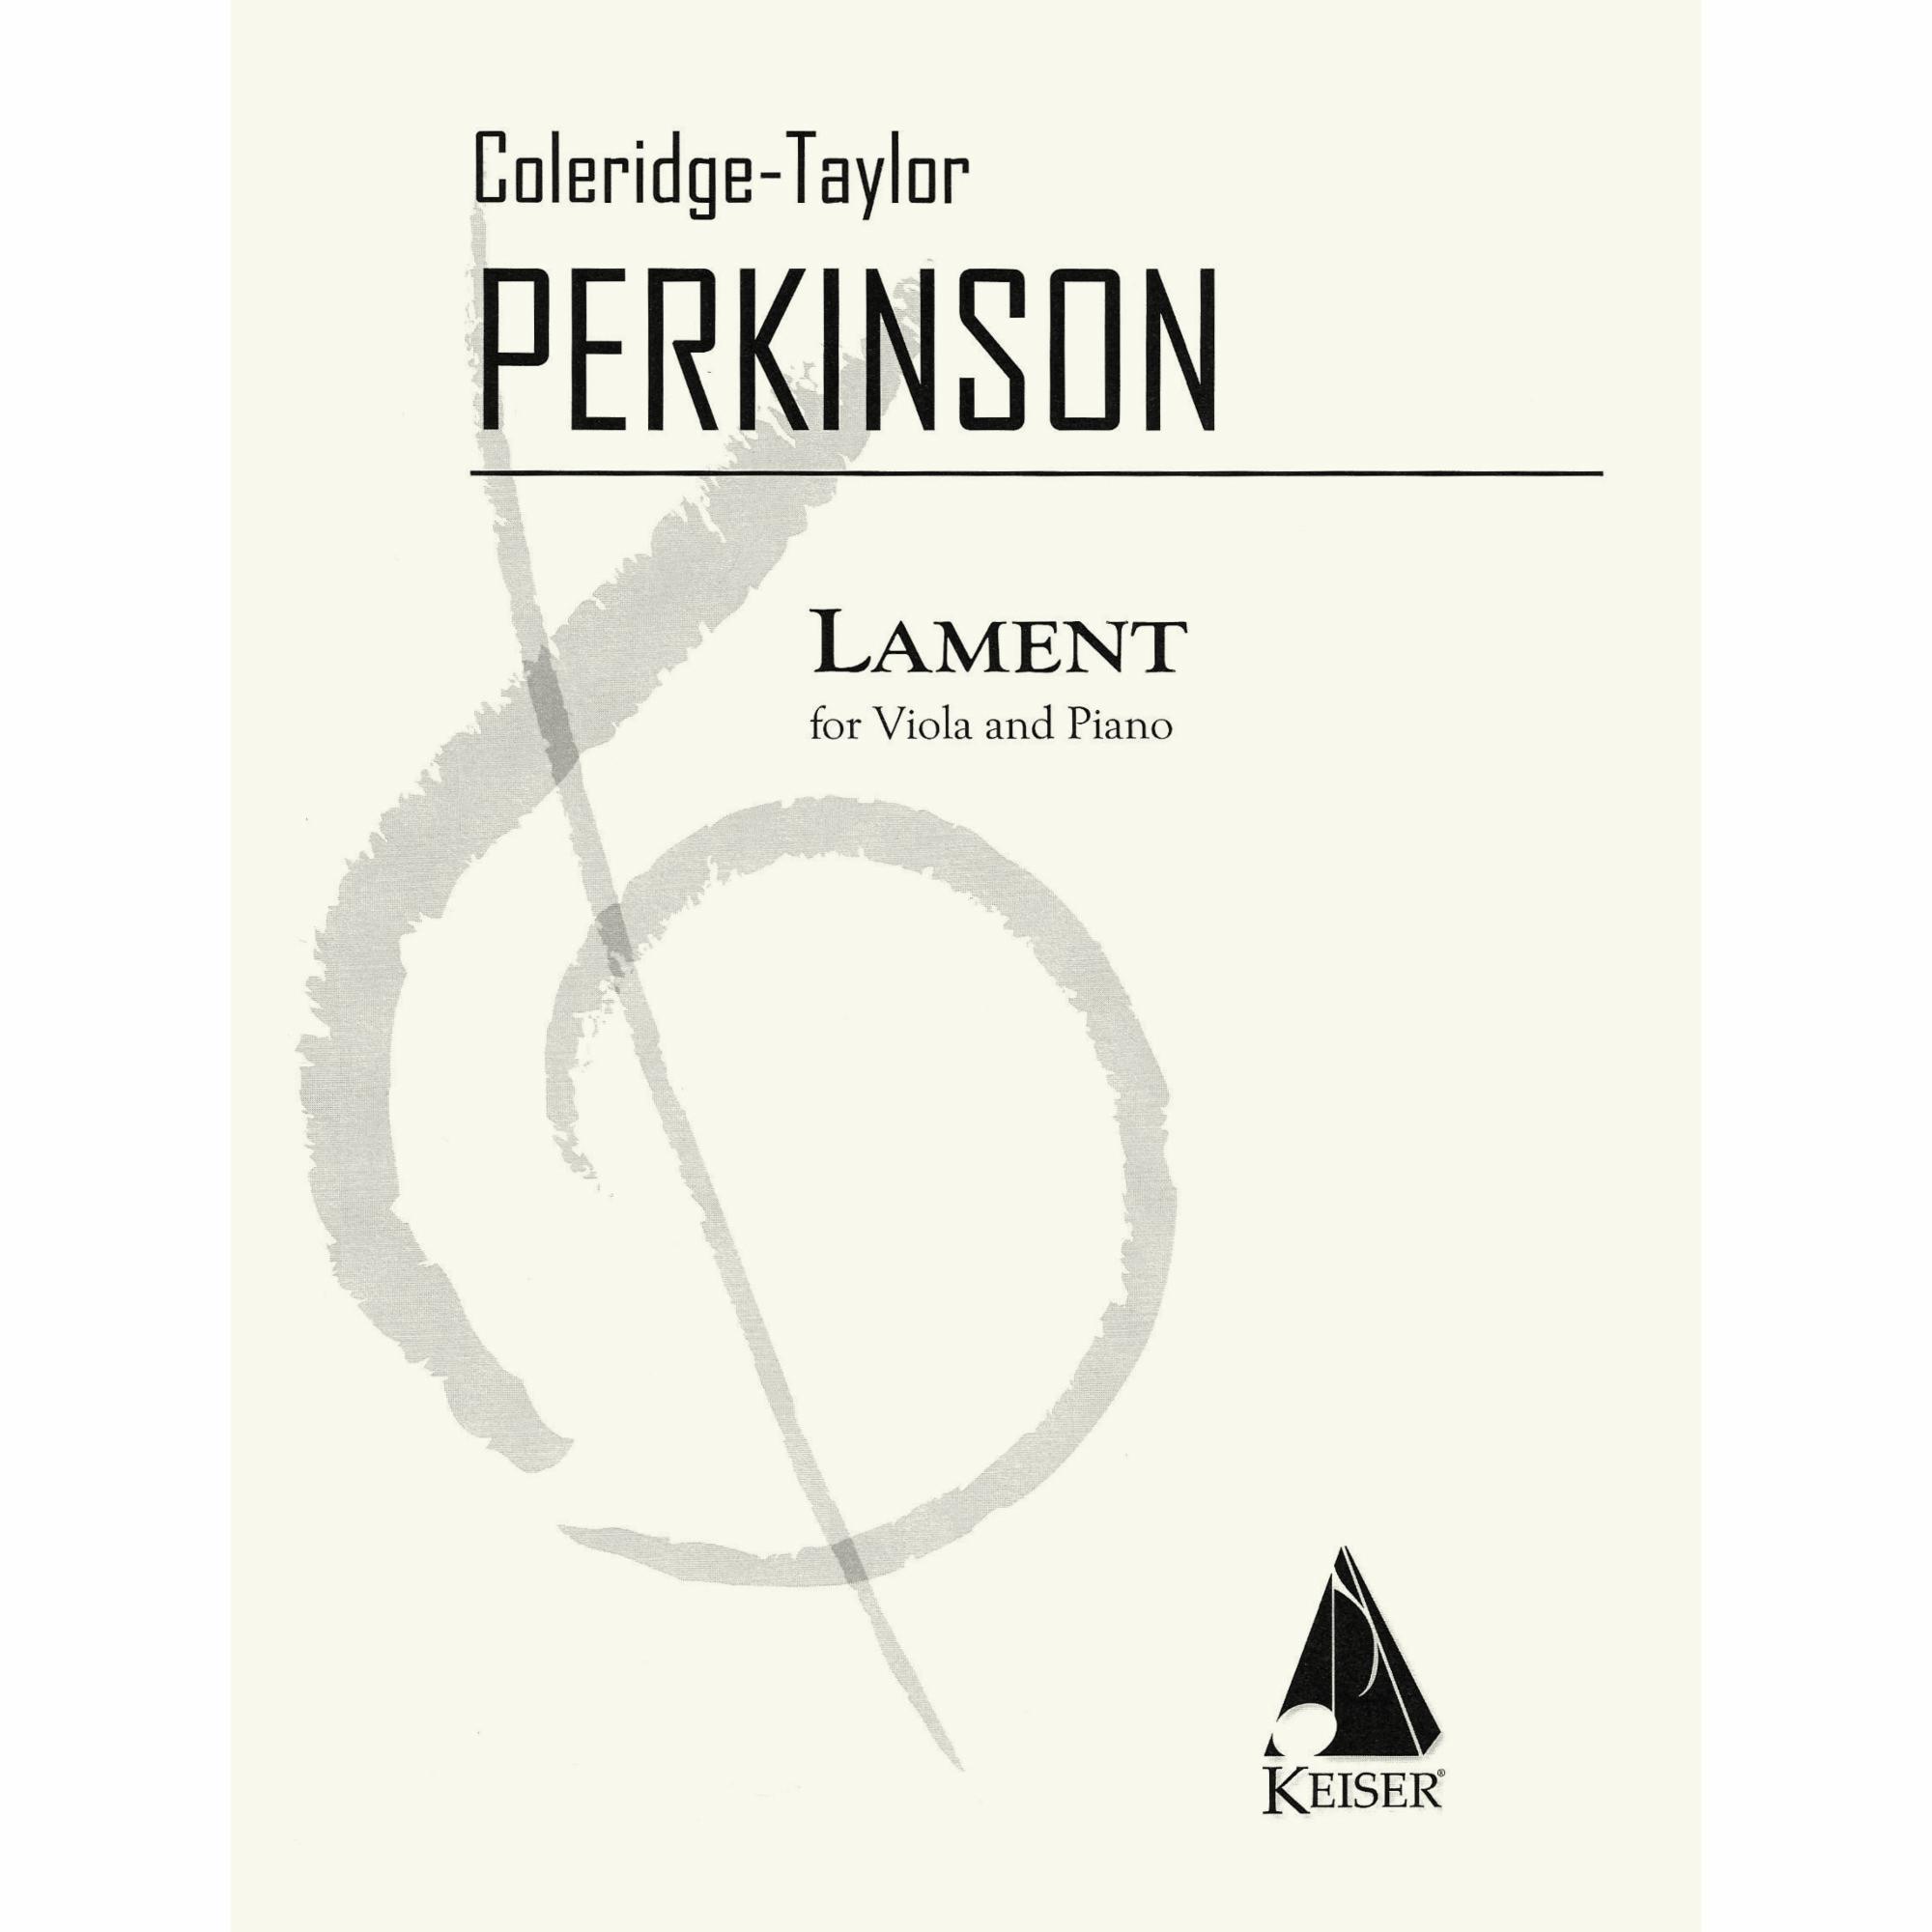 Perkinson -- Lament for Viola and Piano